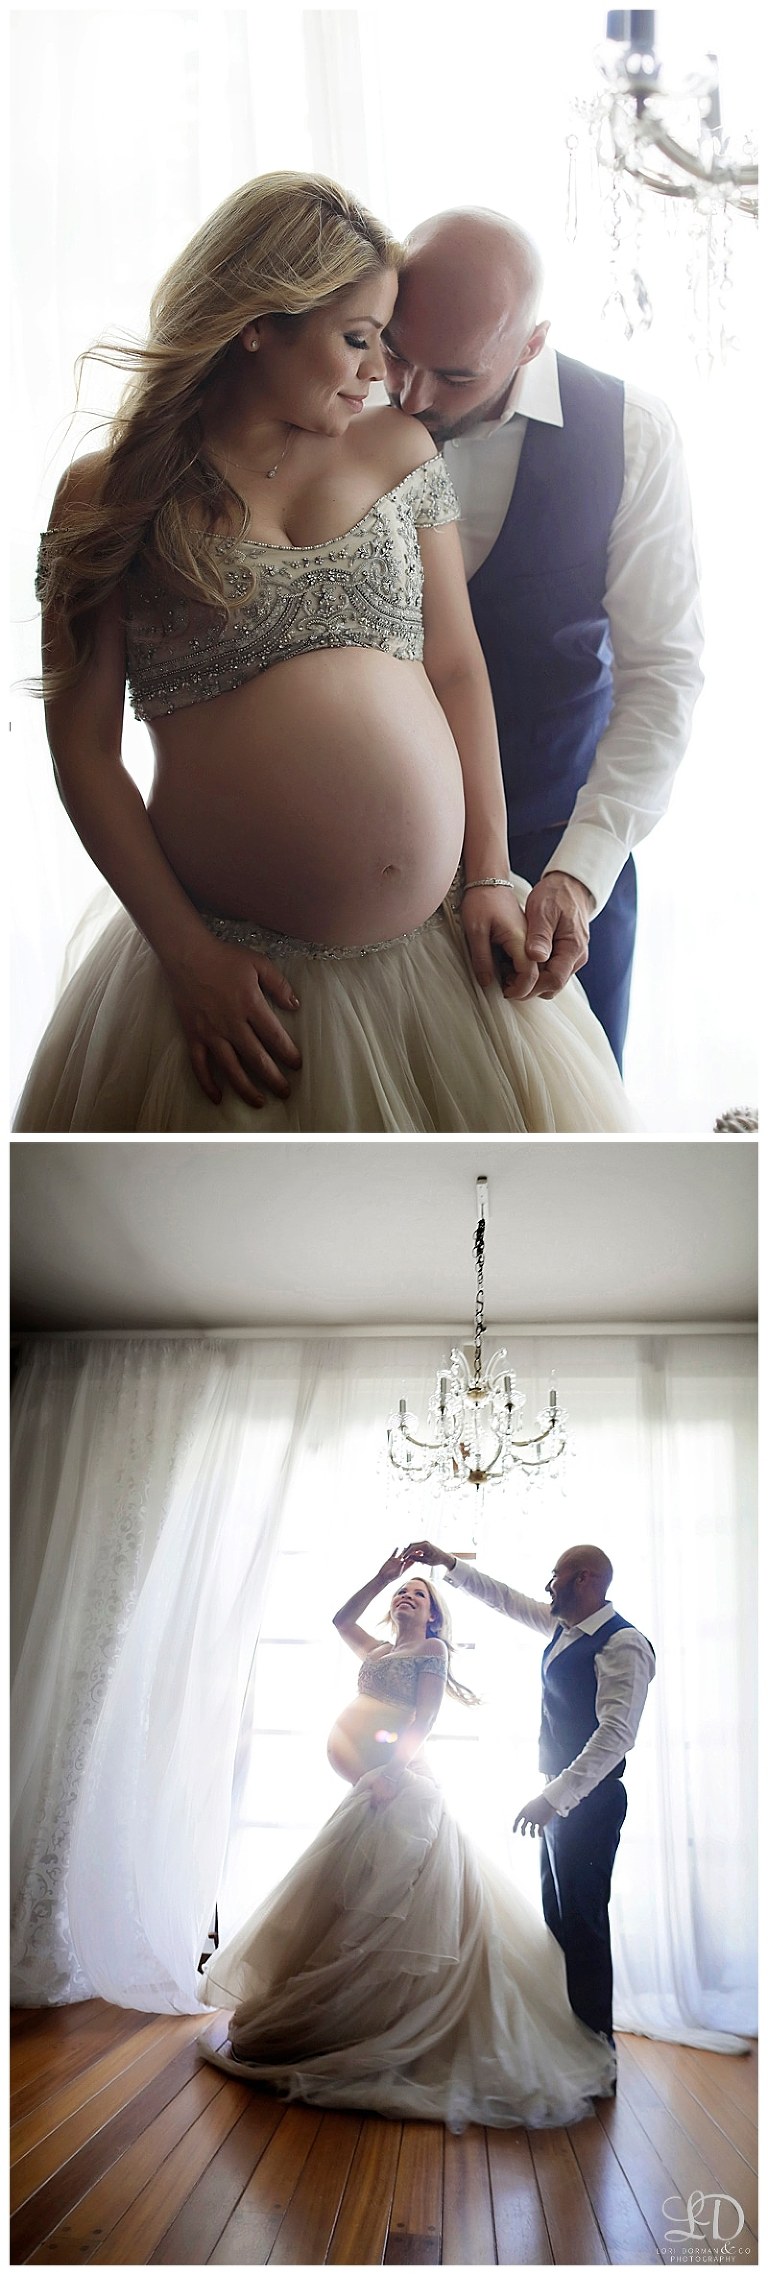 sweet maternity photoshoot-lori dorman photography-maternity boudoir-professional photographer_5144.jpg